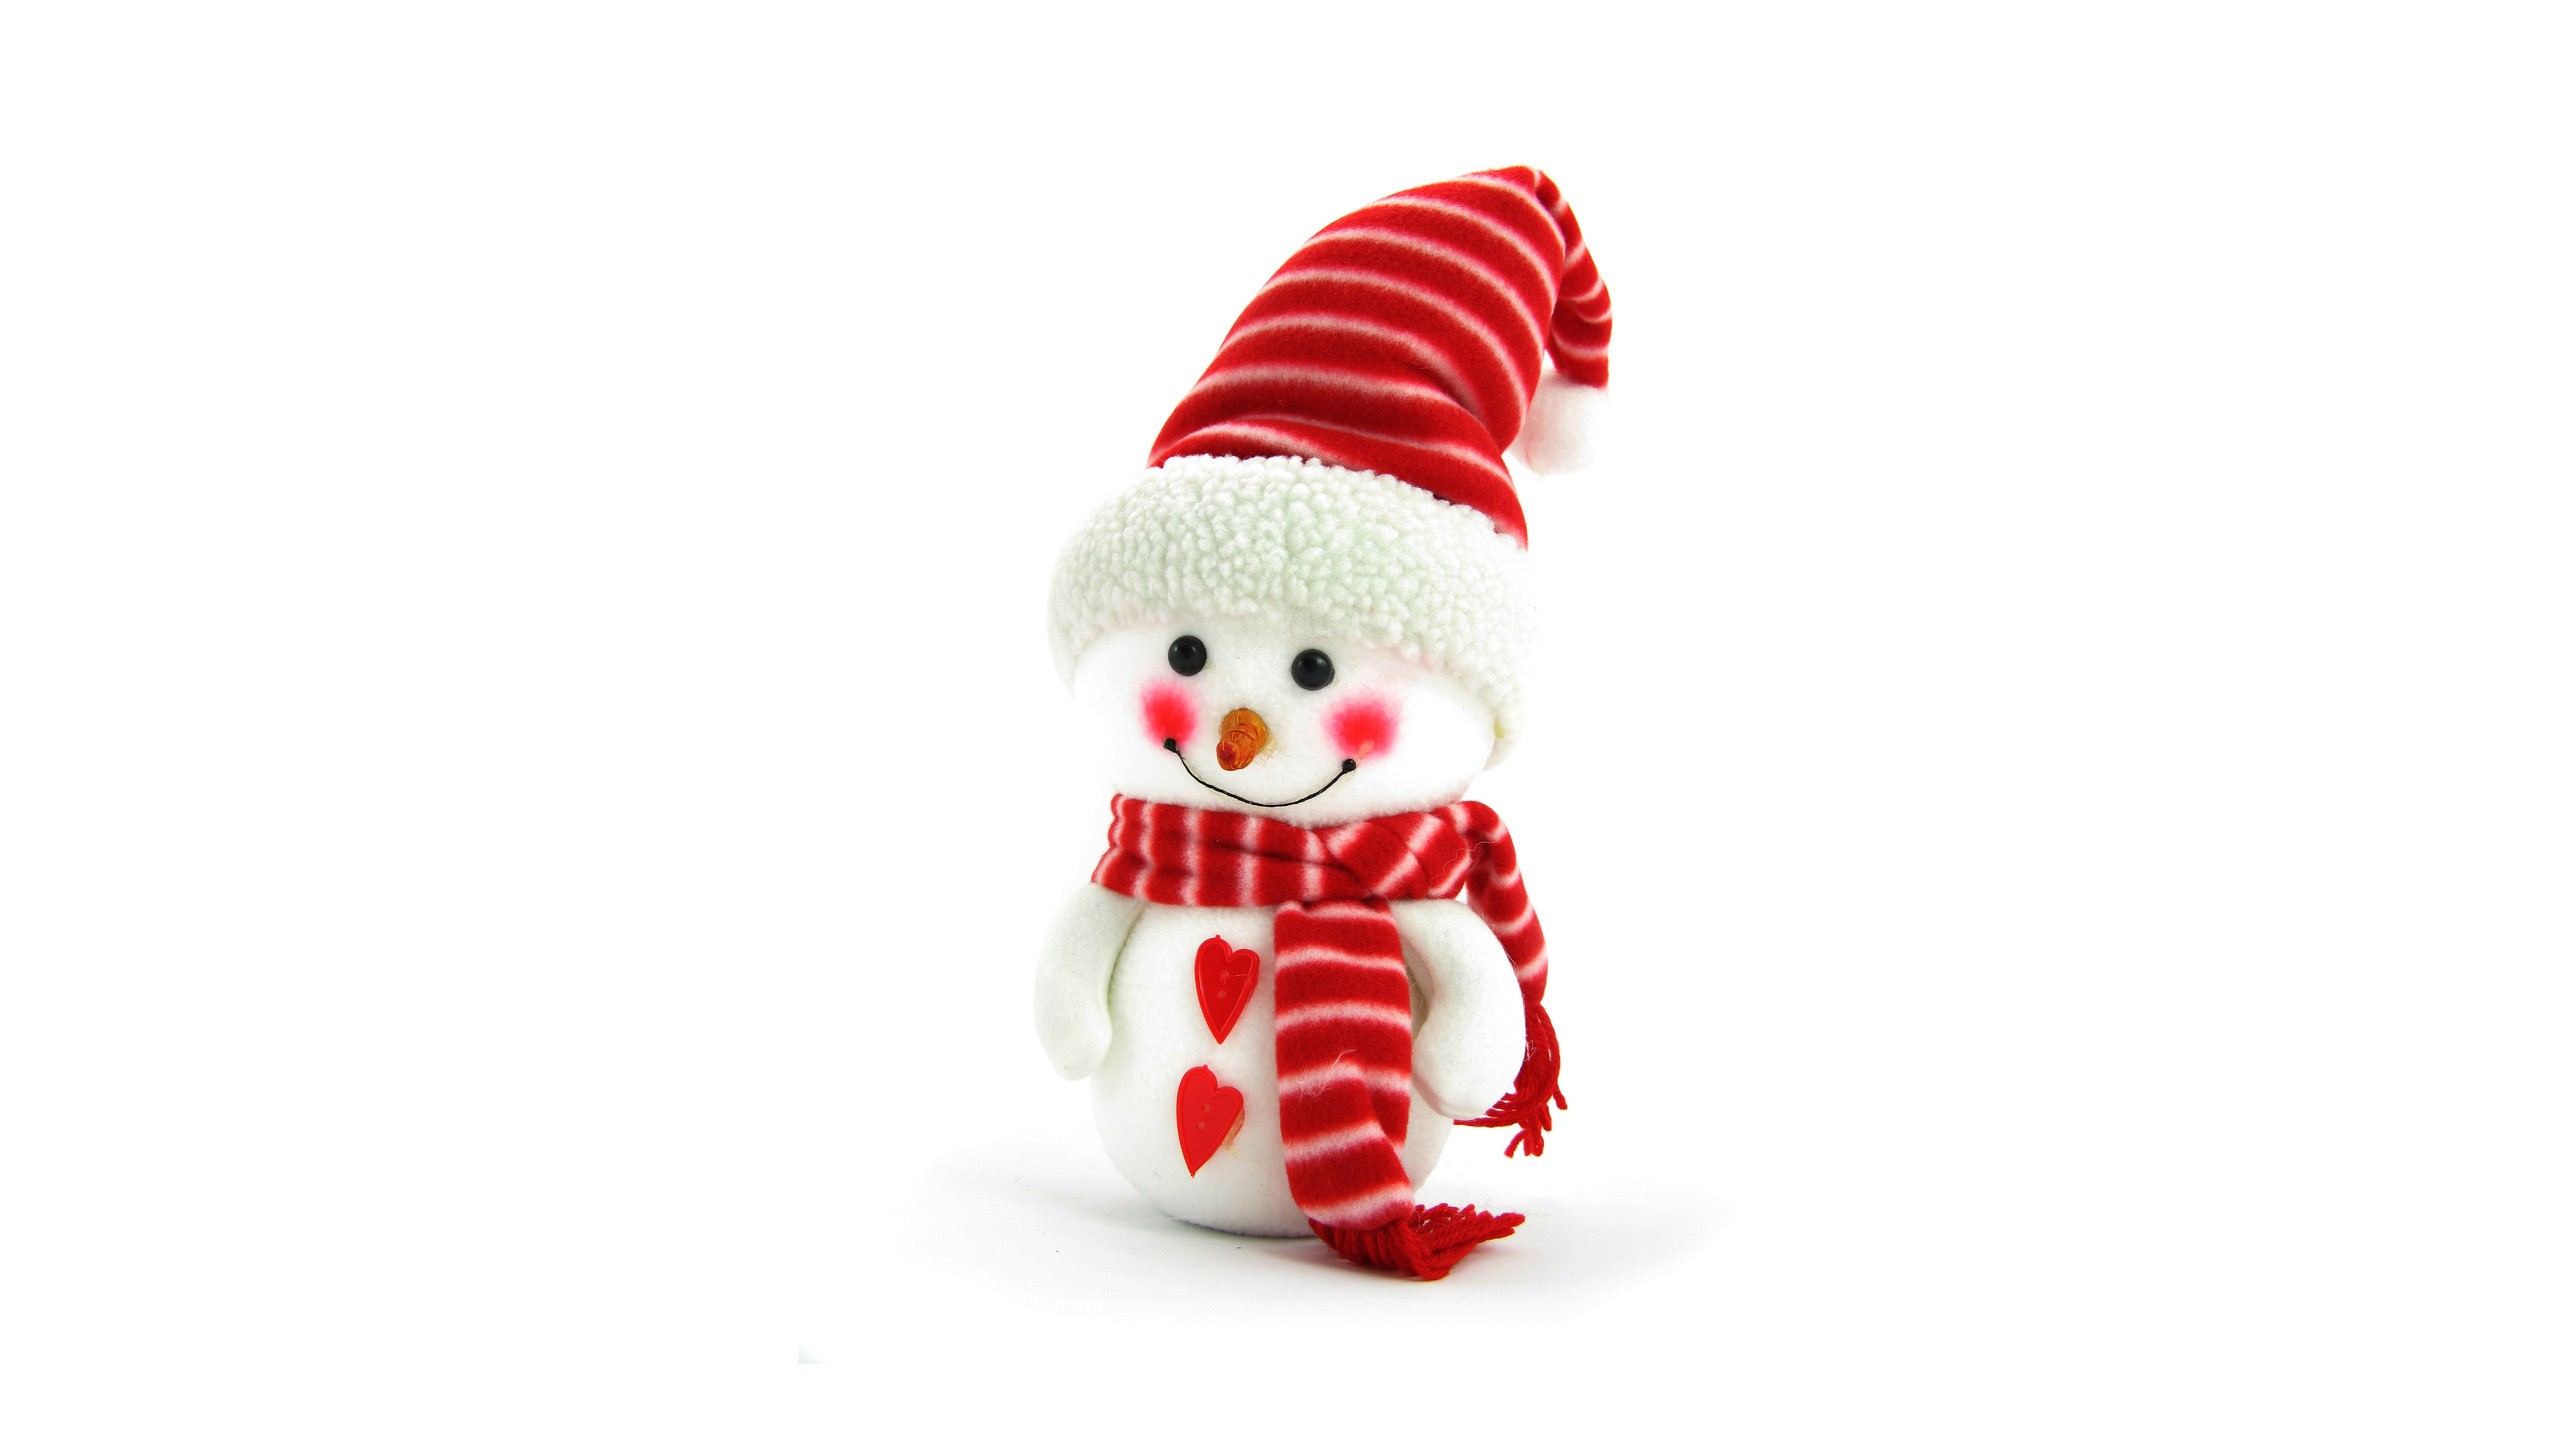 General 2560x1440 simple background Santa hats Christmas snowman